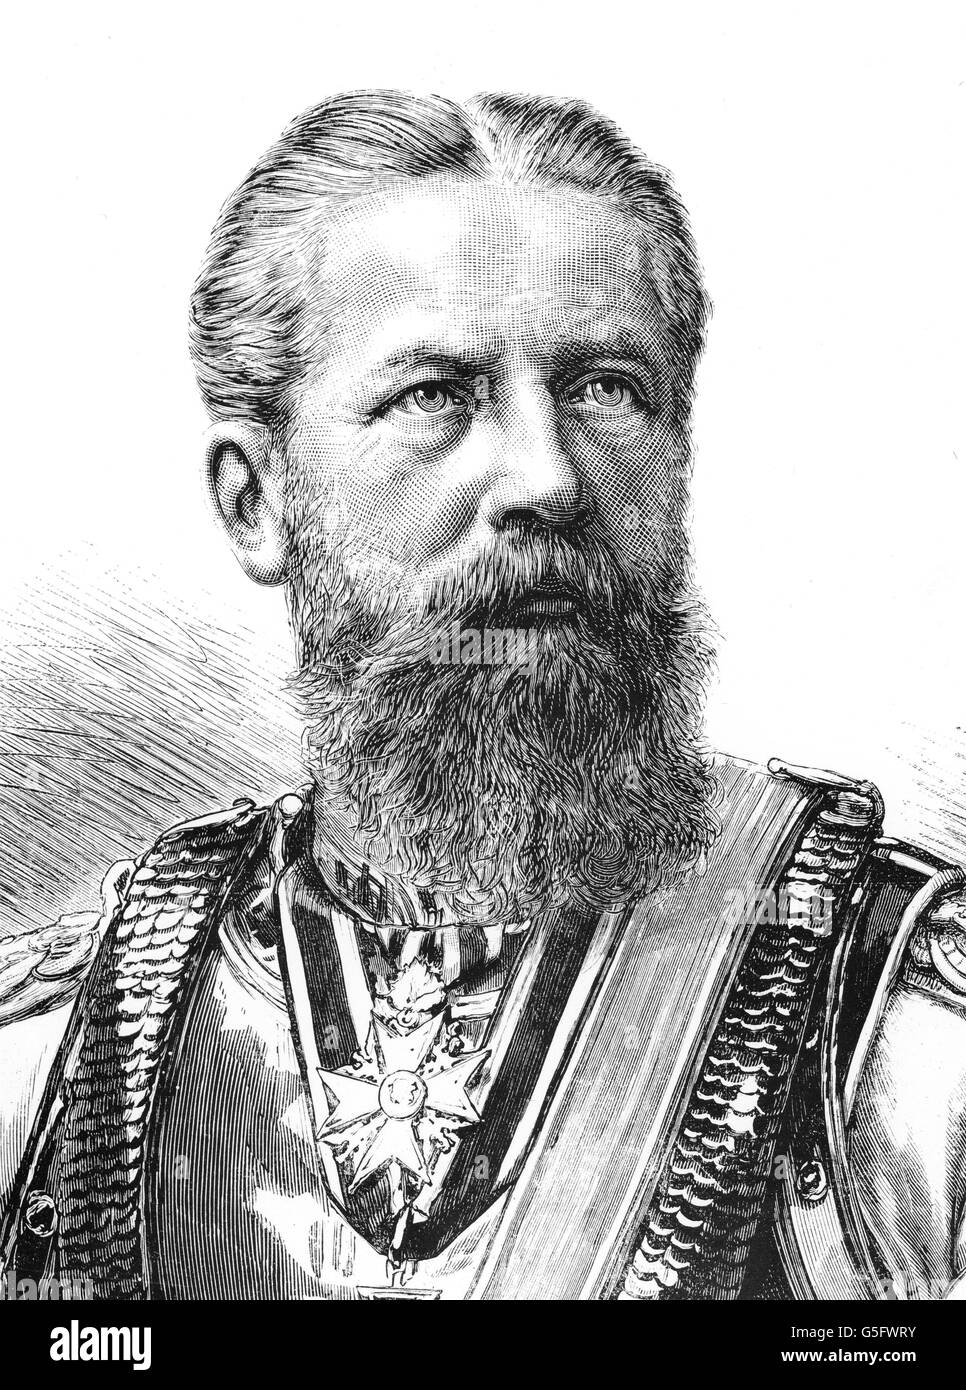 Frederick III, 18.10.1831 - 15.6.1888, German Emperor 9.3. - 15.6.1888, portrait, wood engraving, circa 1875, Stock Photo